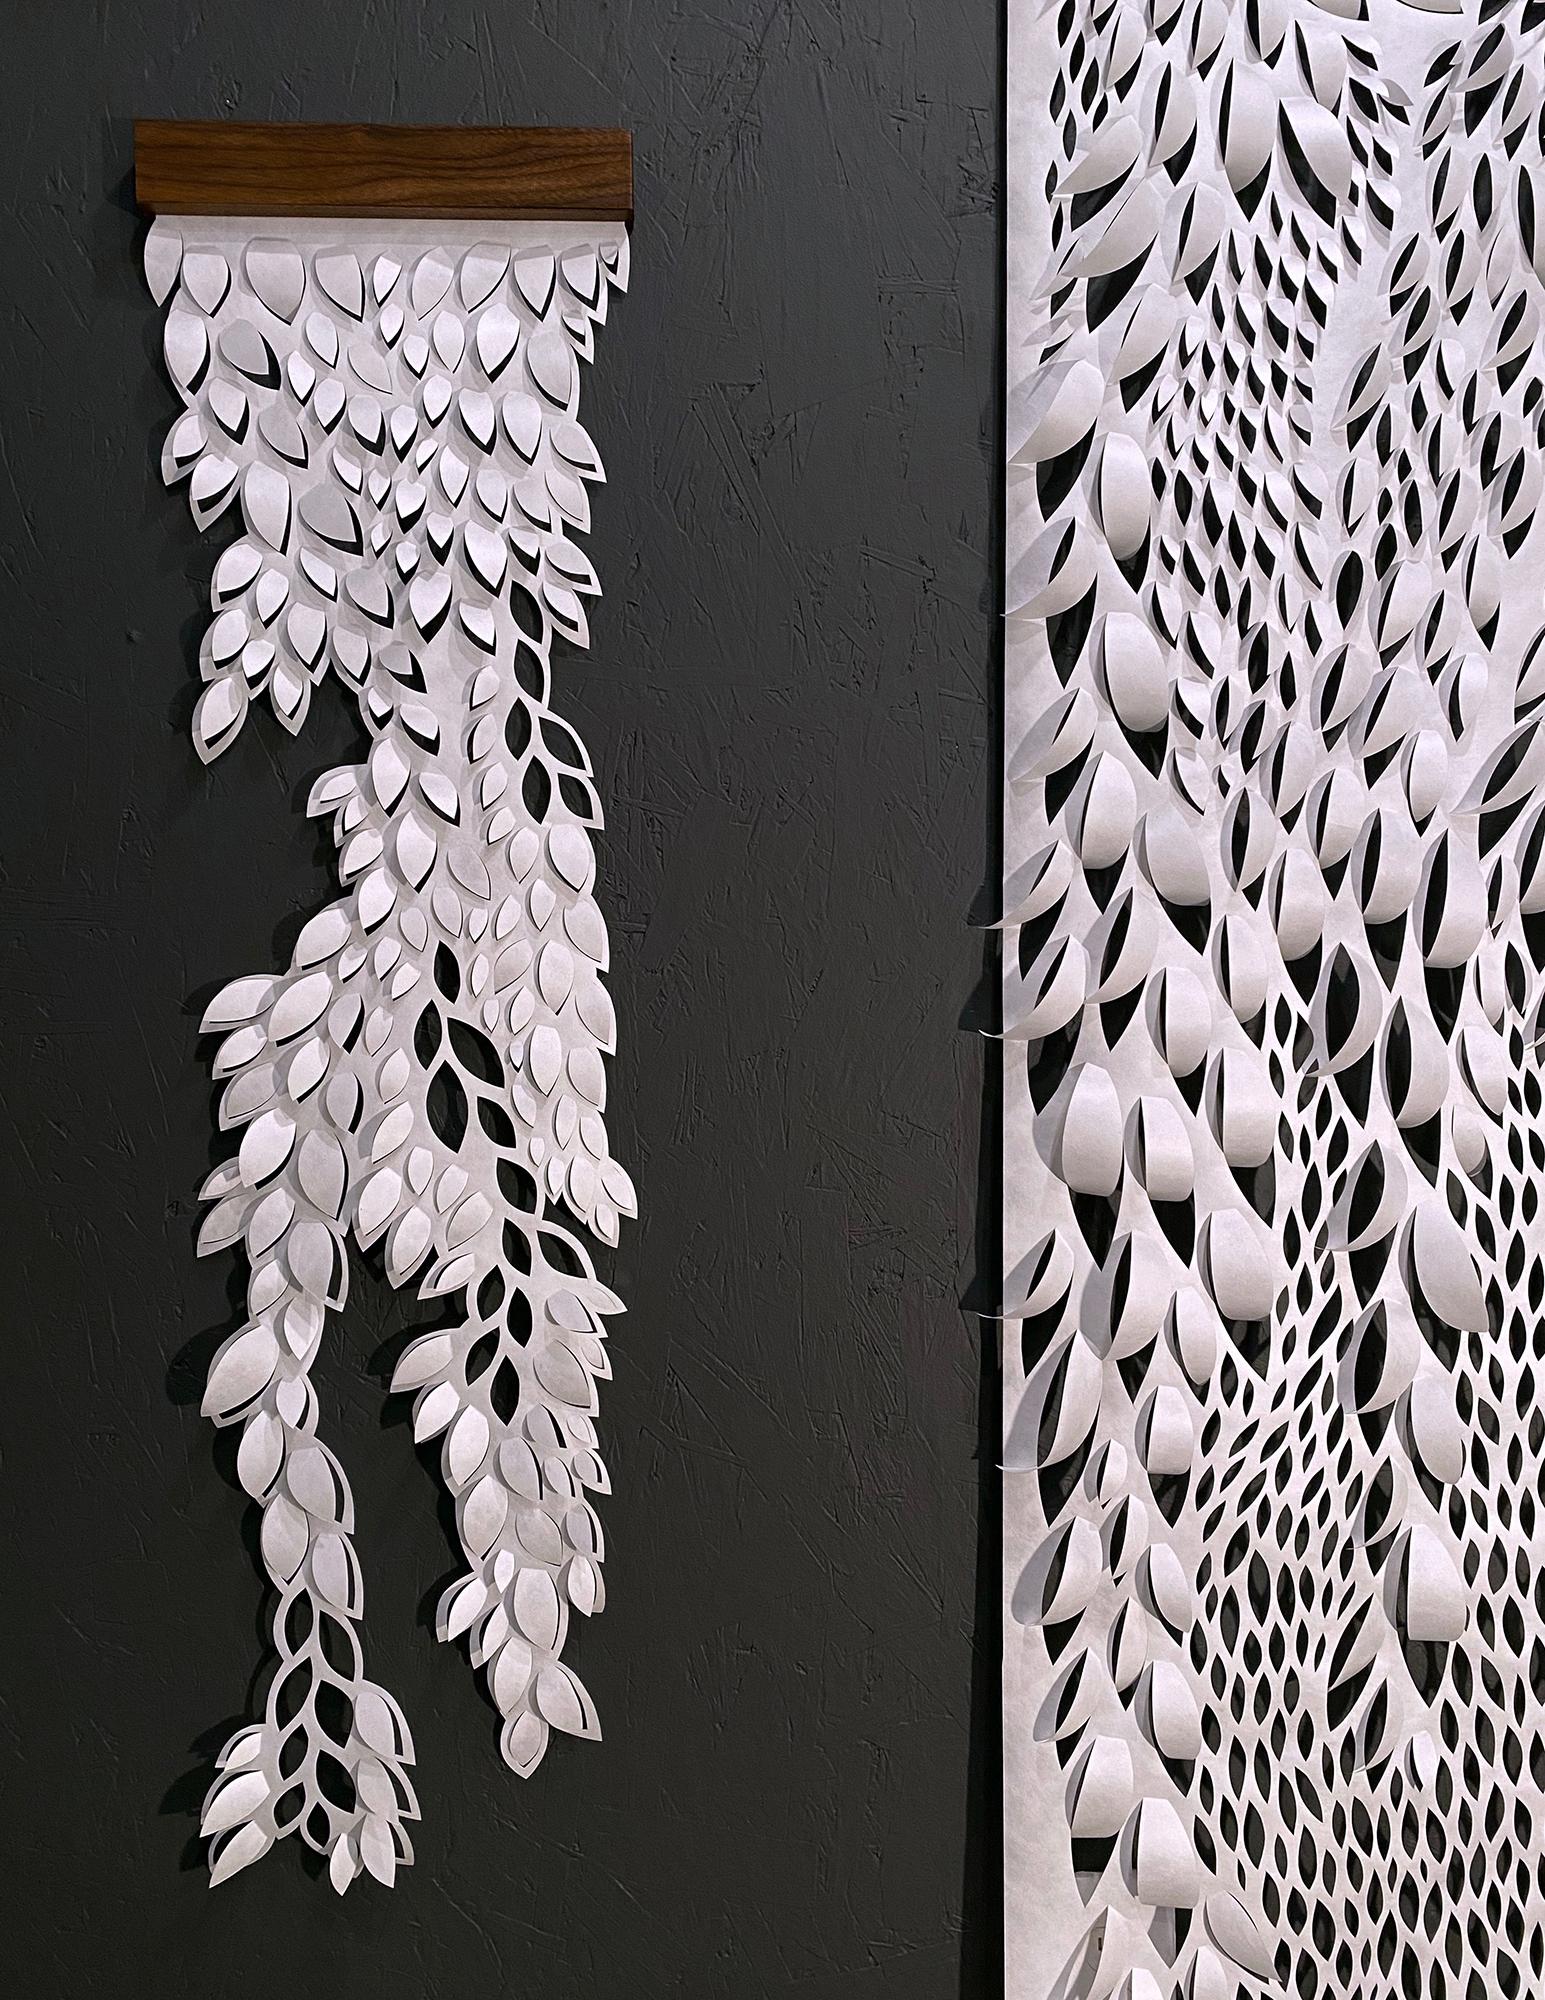 Hand-cut Paper Scroll, Organic Leaf like cut paper wall hangings 36x24 1